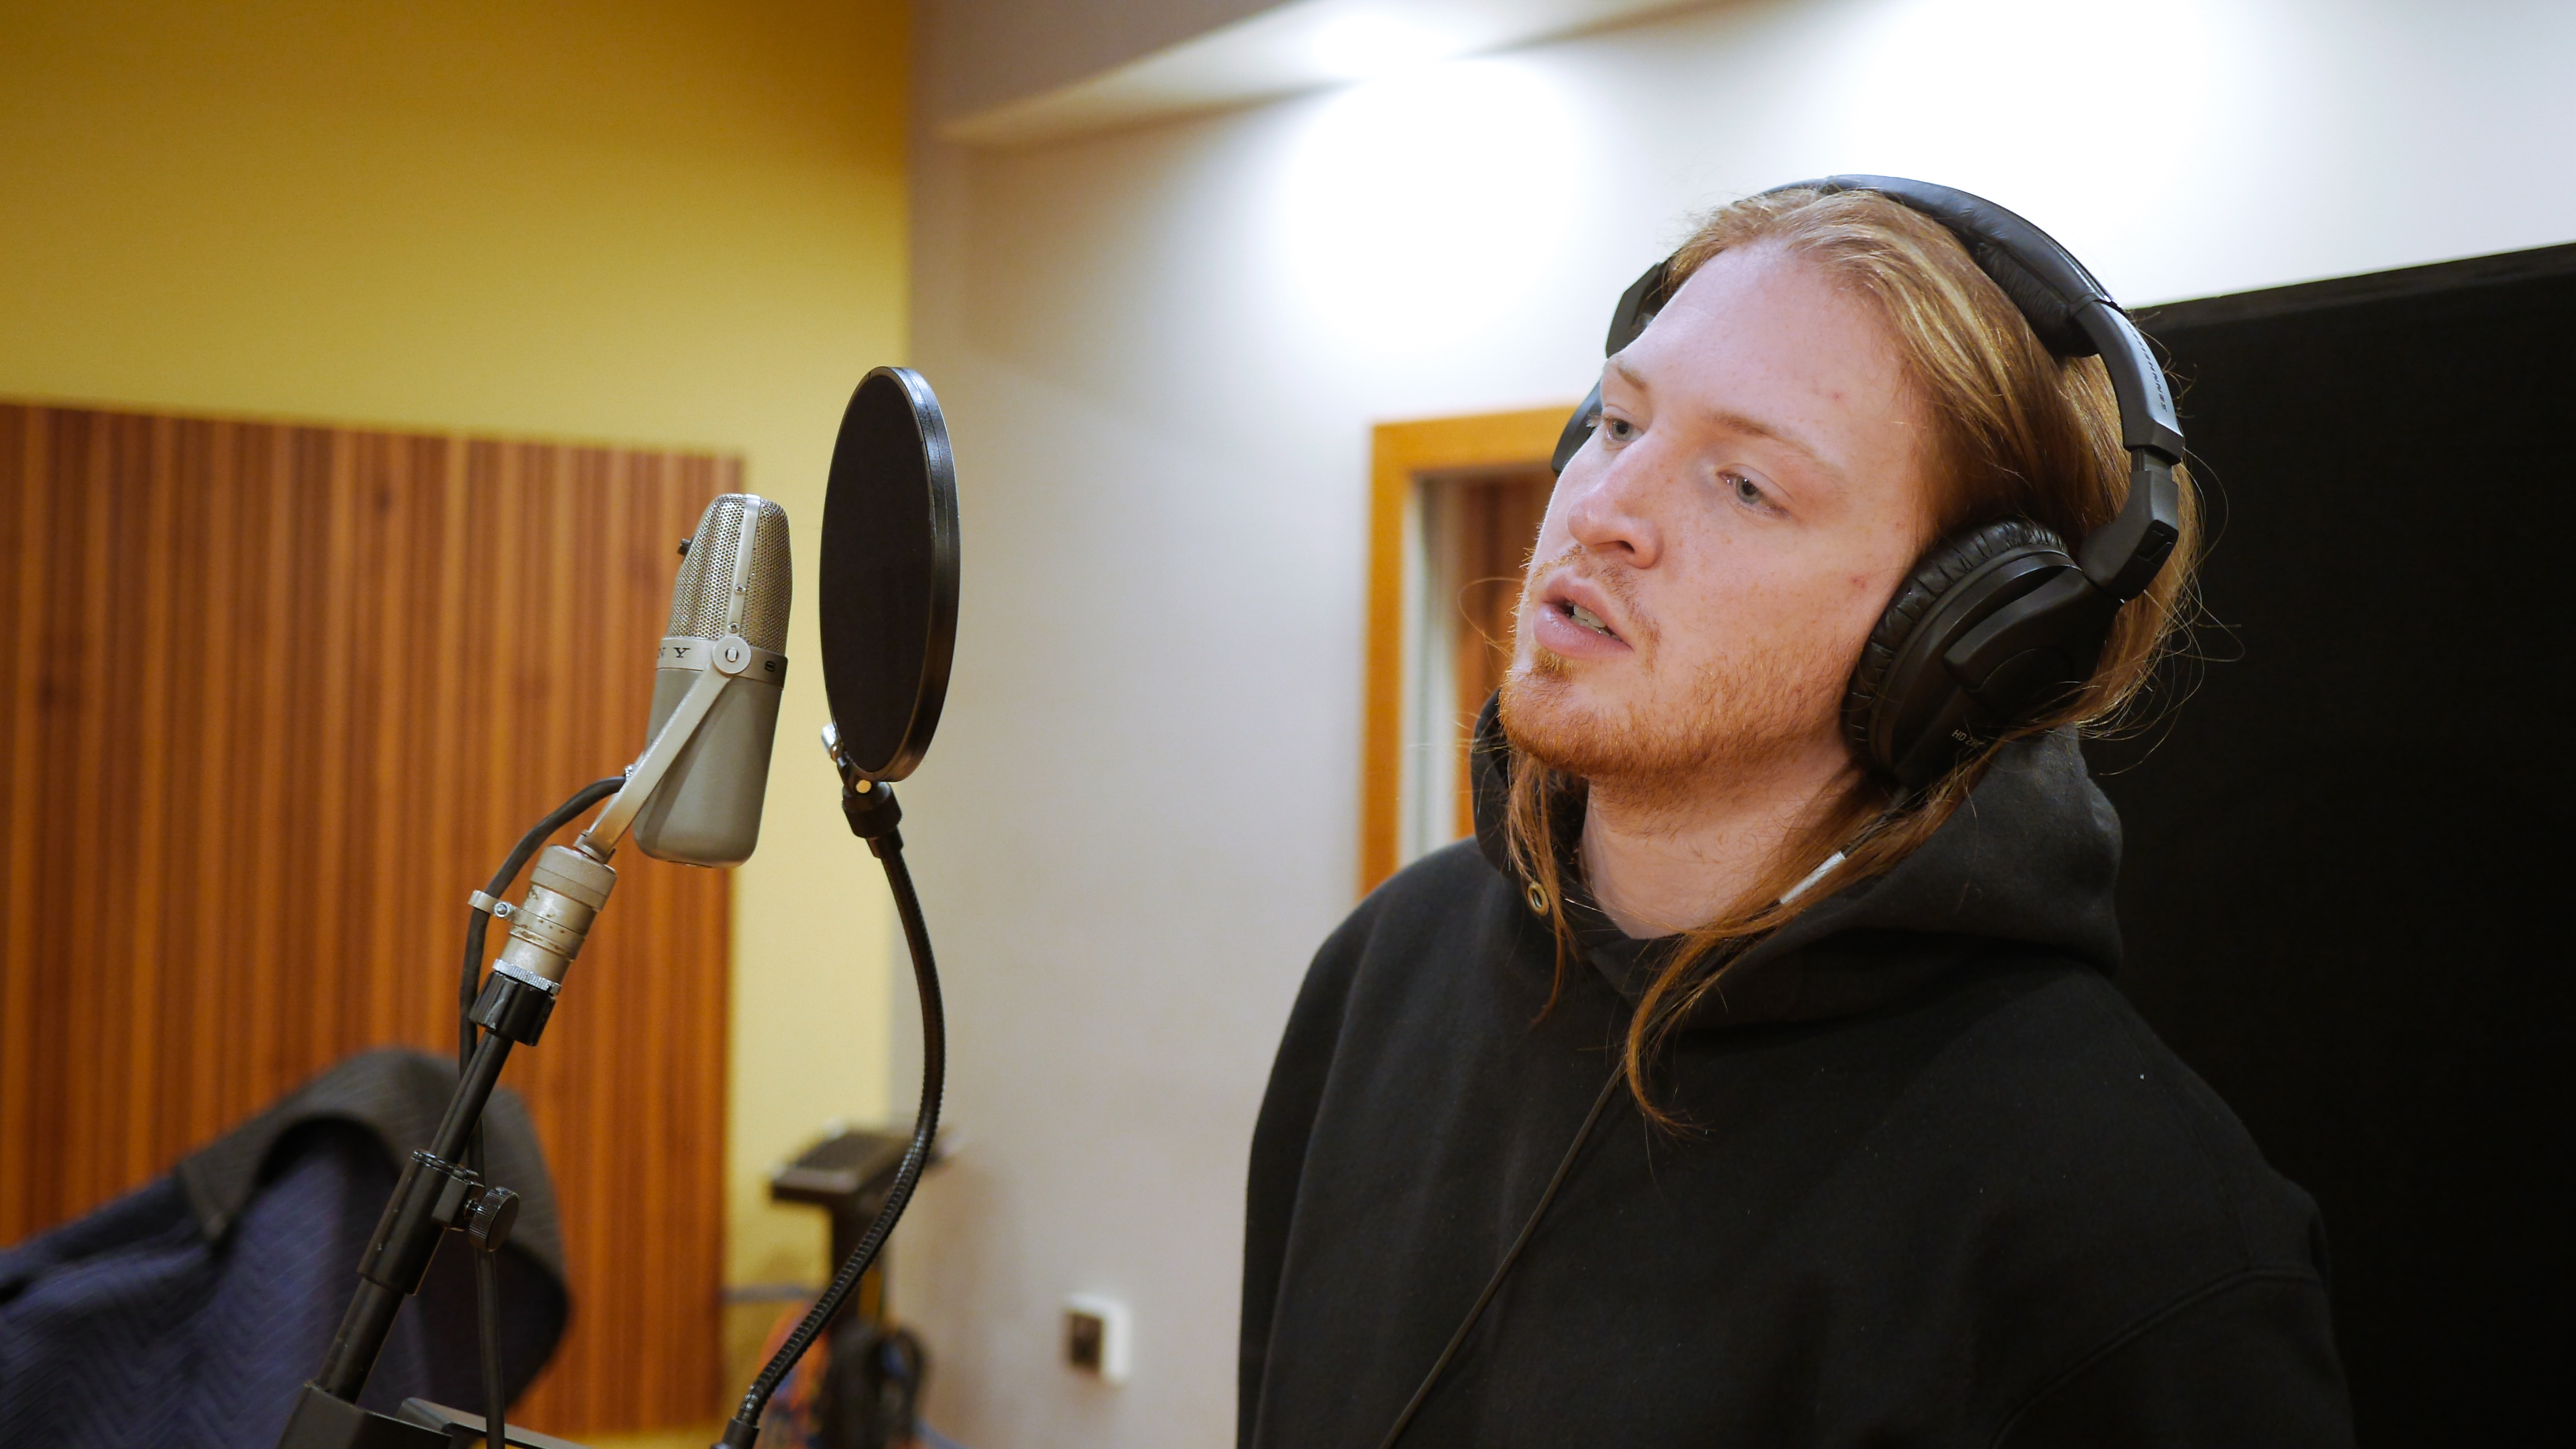 Atlantic Recording Artist “Zero” at Forge